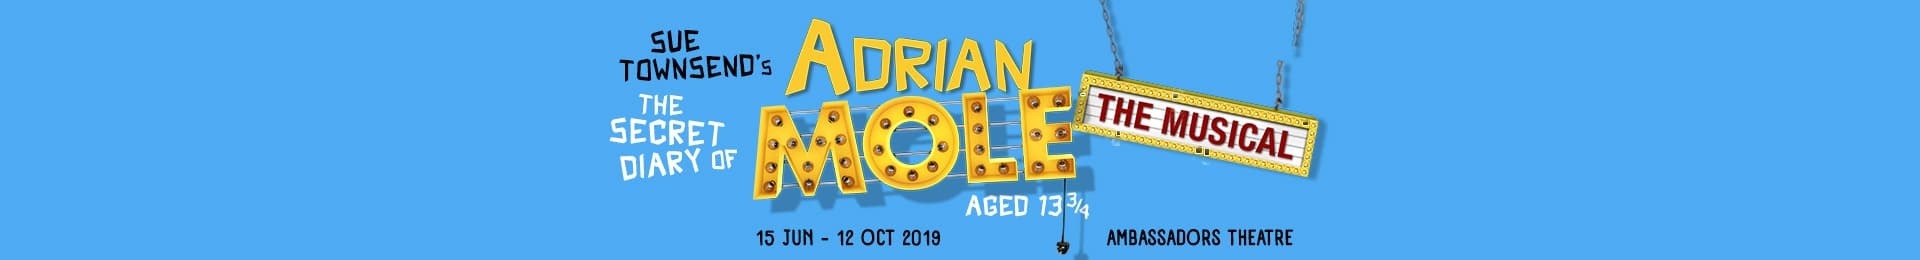 The Secret Diary of Adrian Mole aged 13 3/4 Tickets at the Ambassadors Theatre, London with Bella Italia - St.Martin's Lane